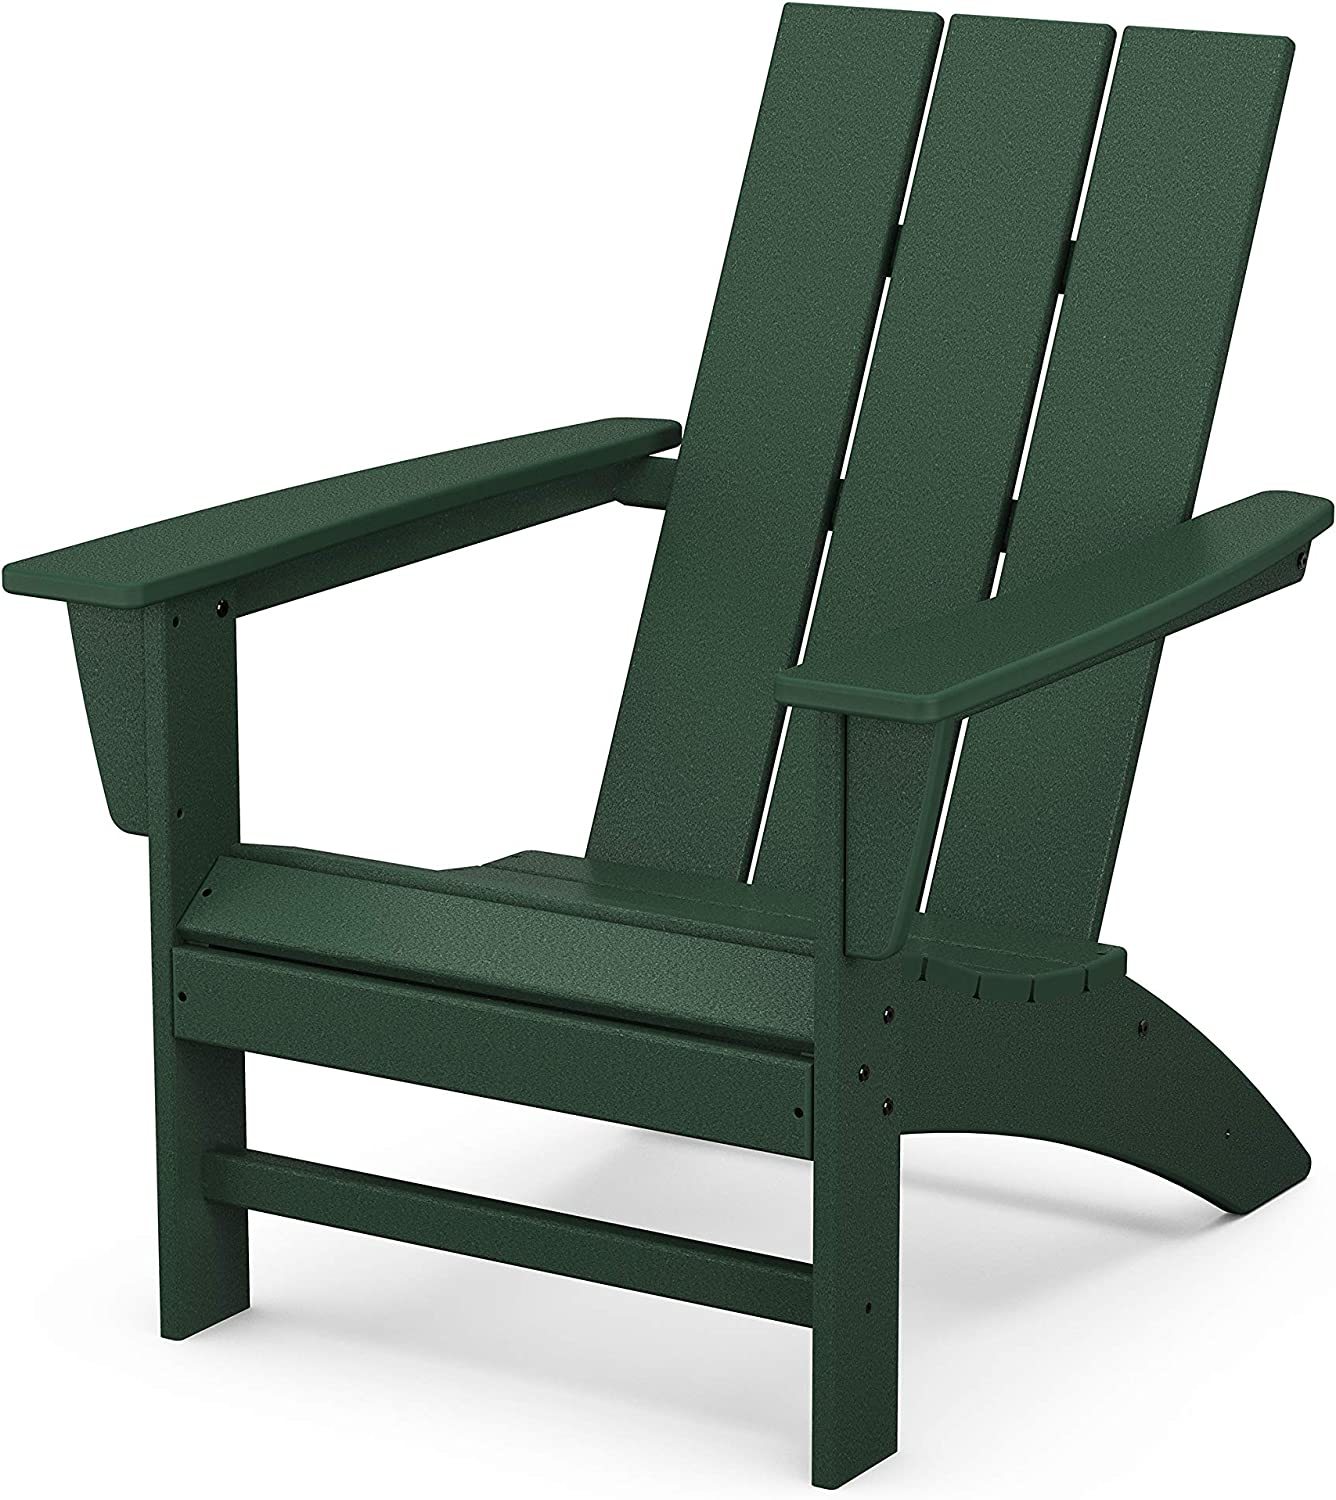 Green Modern Adirondack Chair, Polywood Ad420Gr. - $349.96